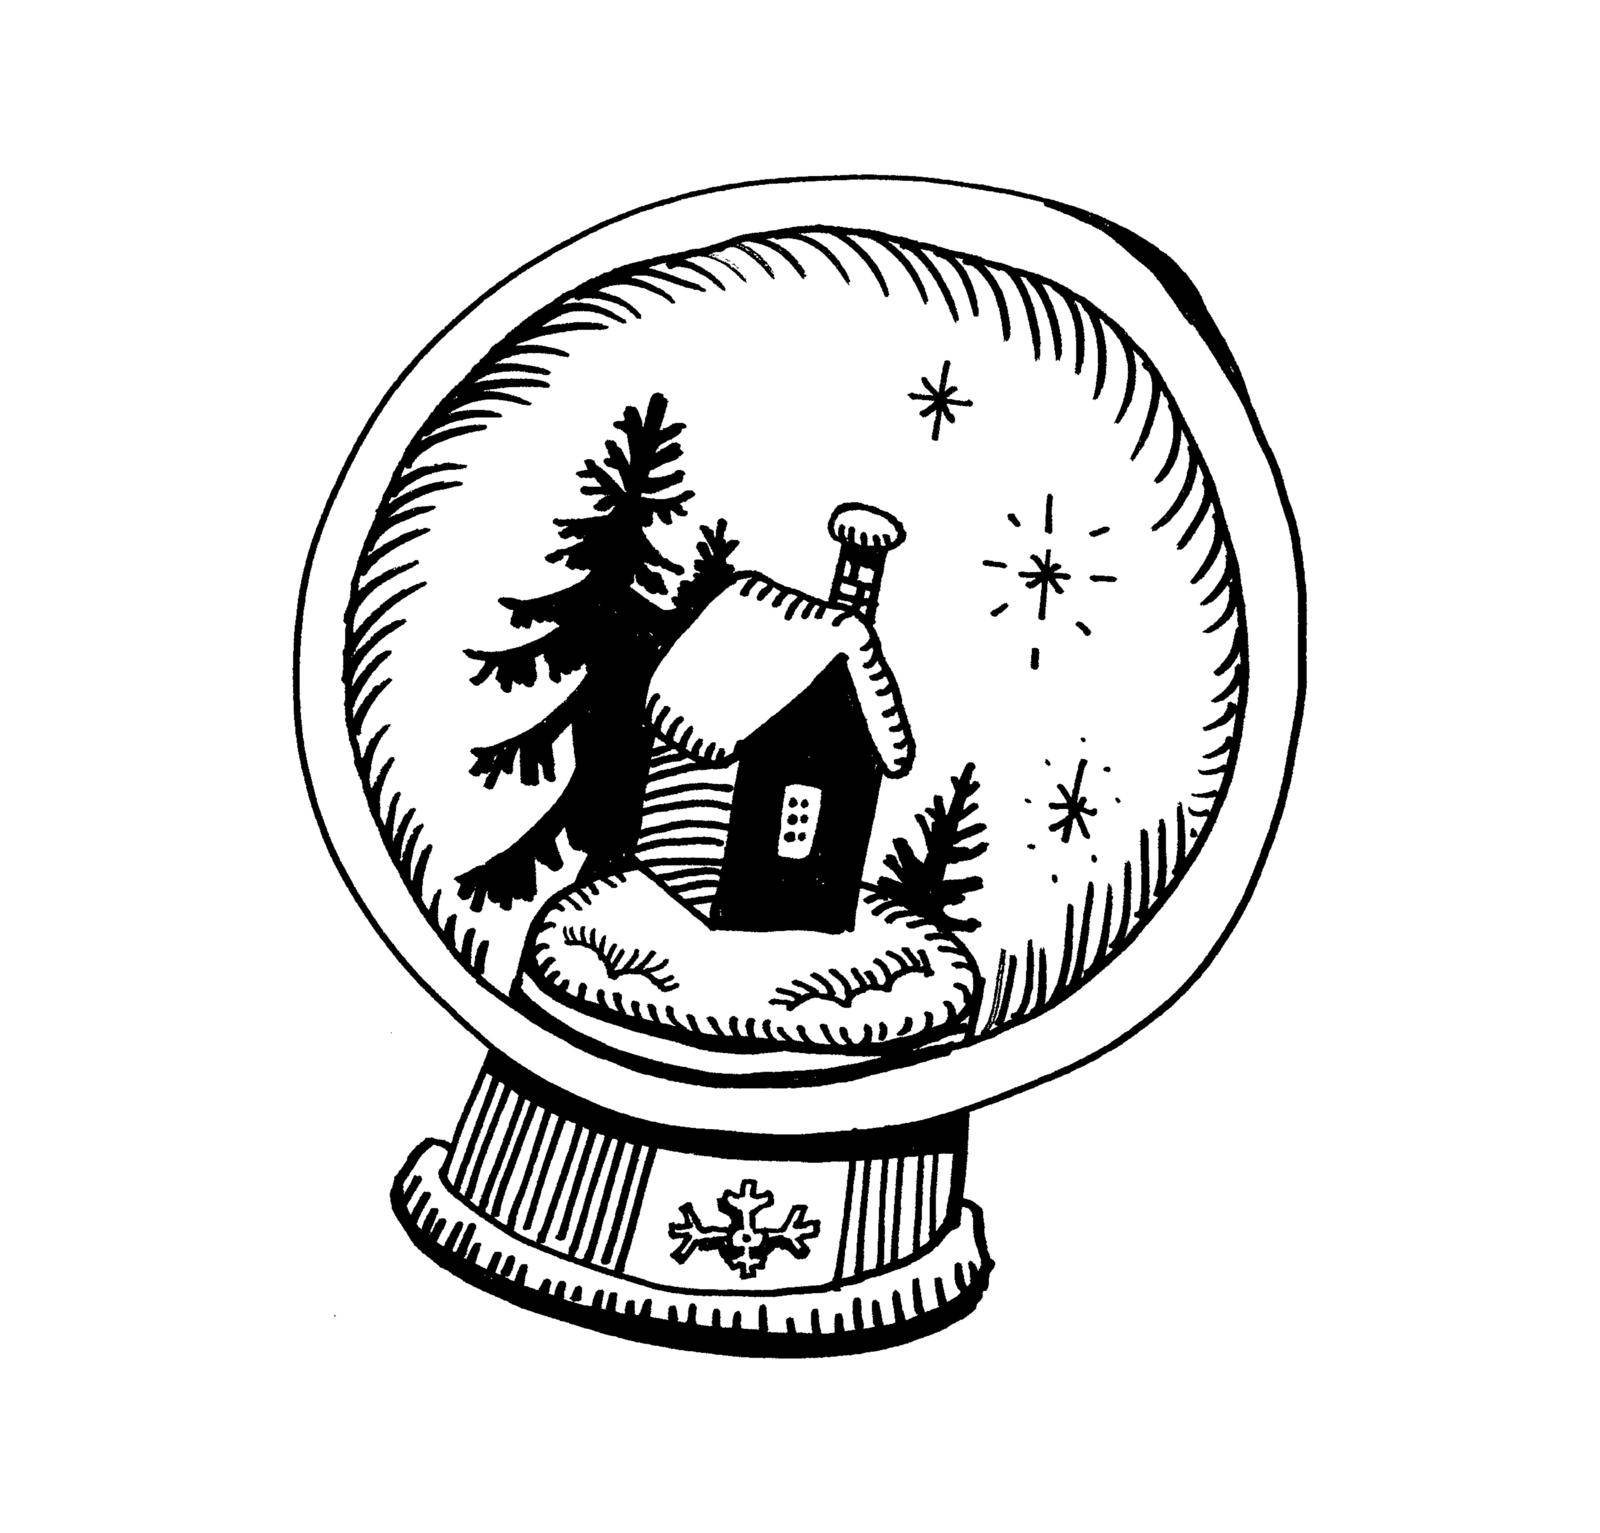 Christmas Souvenir Glass Ball with Snow Vector Hand Drawn by krotova_art